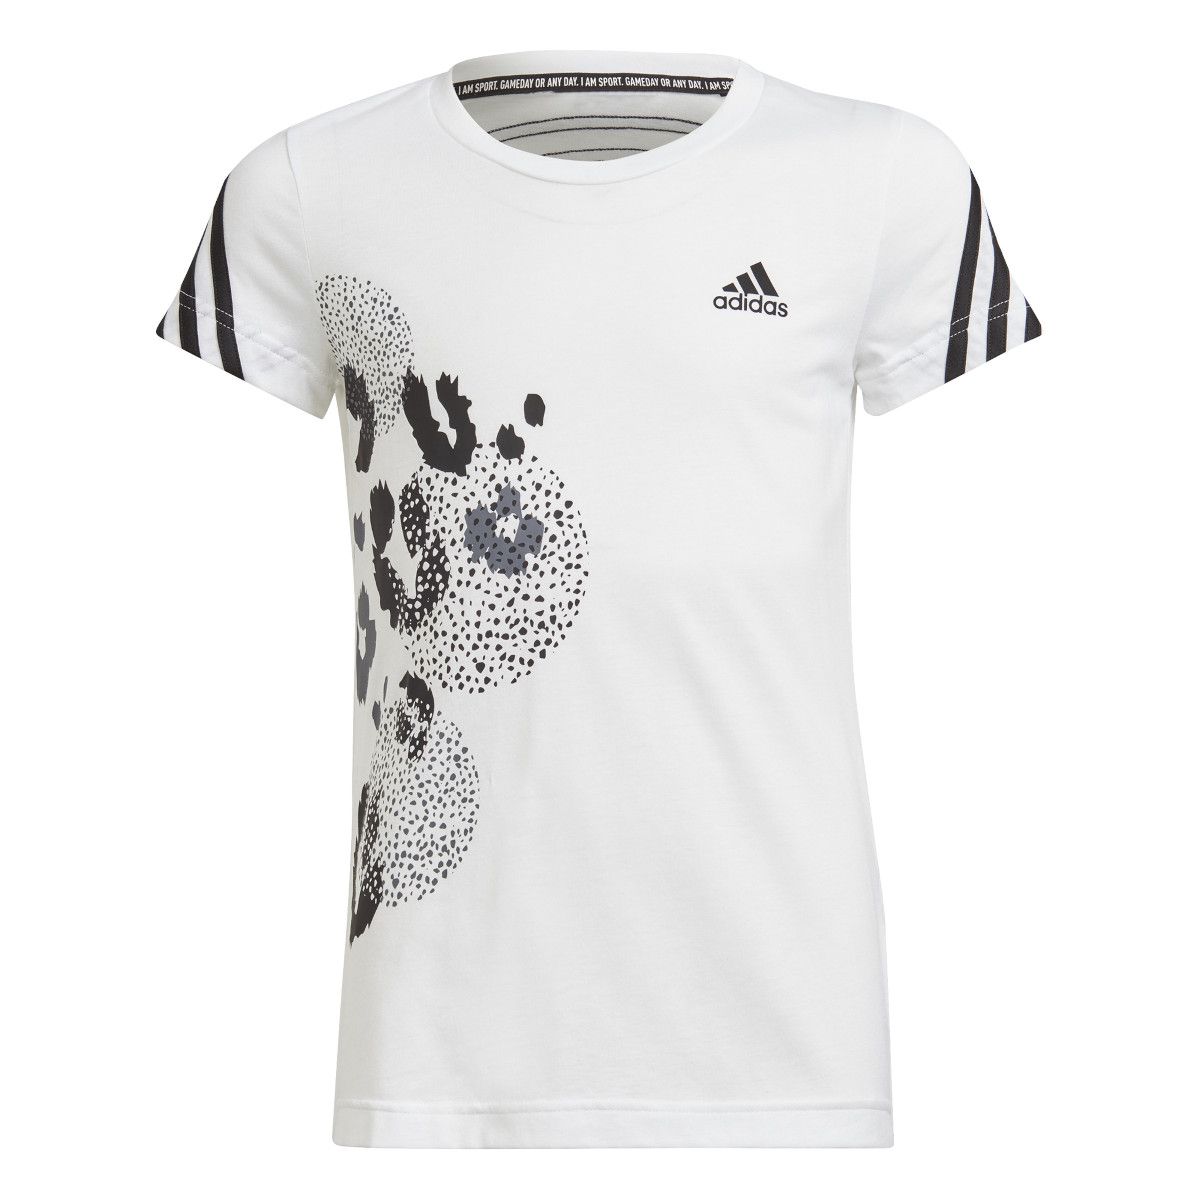 adidas 3-Stripes Graphic Girls' Tennis T-Shirt H26605